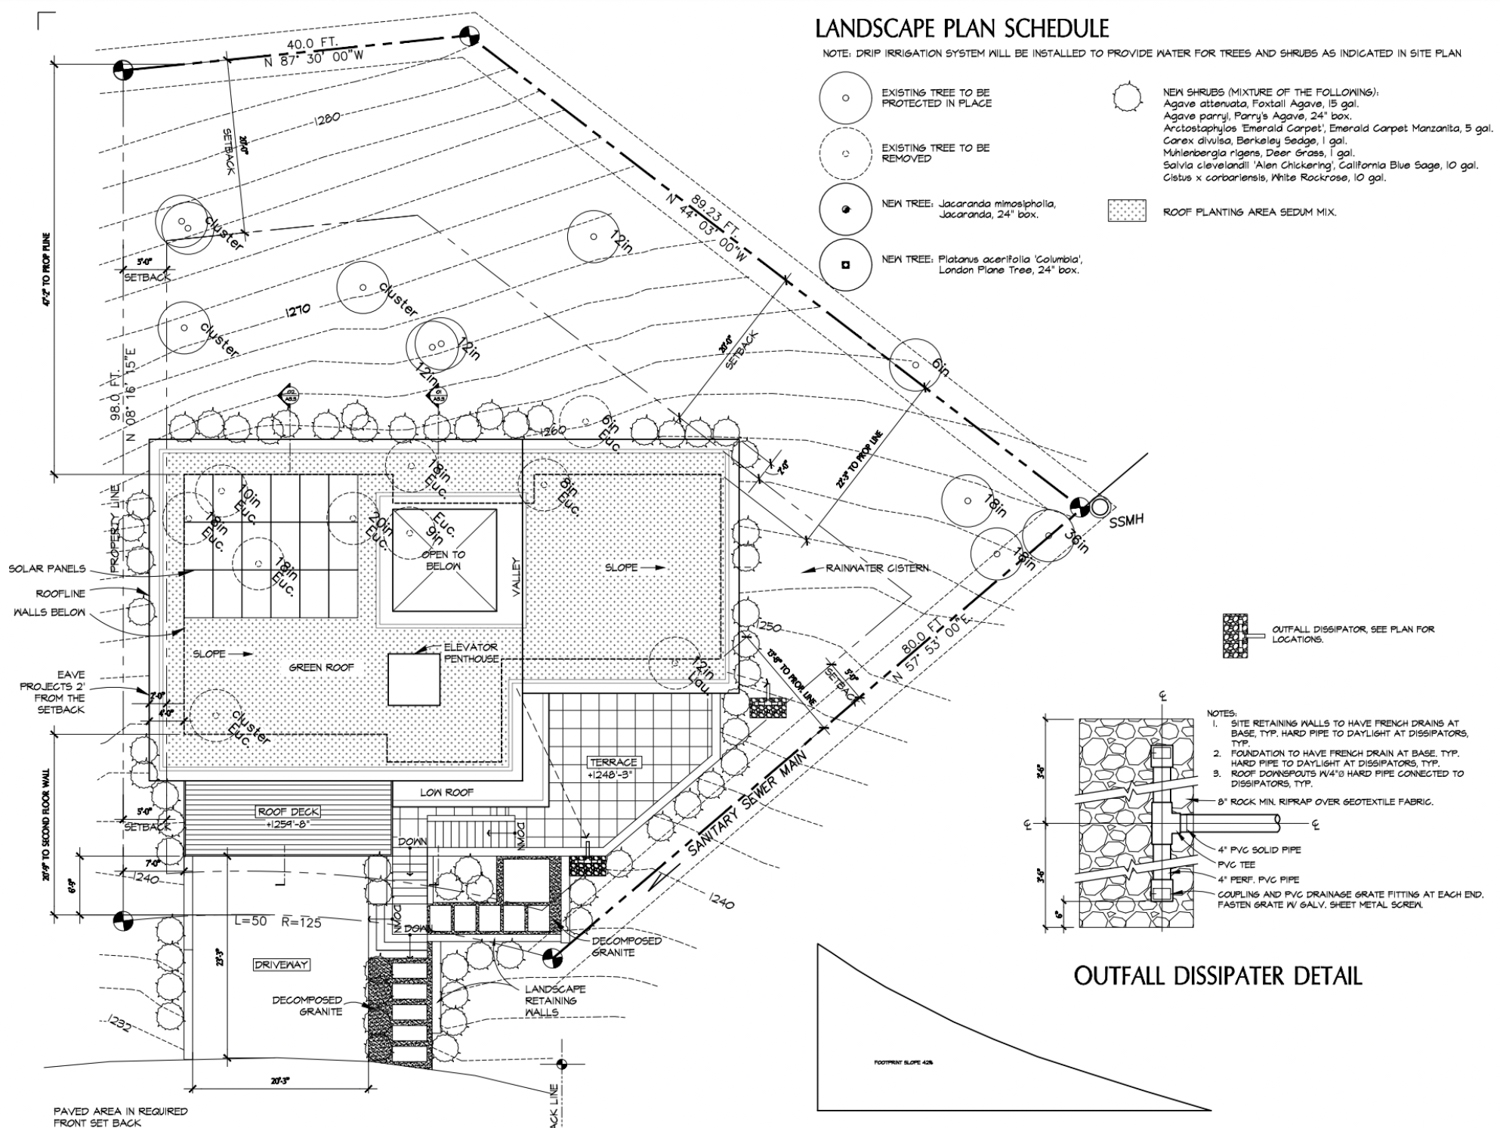 8156 Skyline Boulevard site map, rendering by John Clark Architect